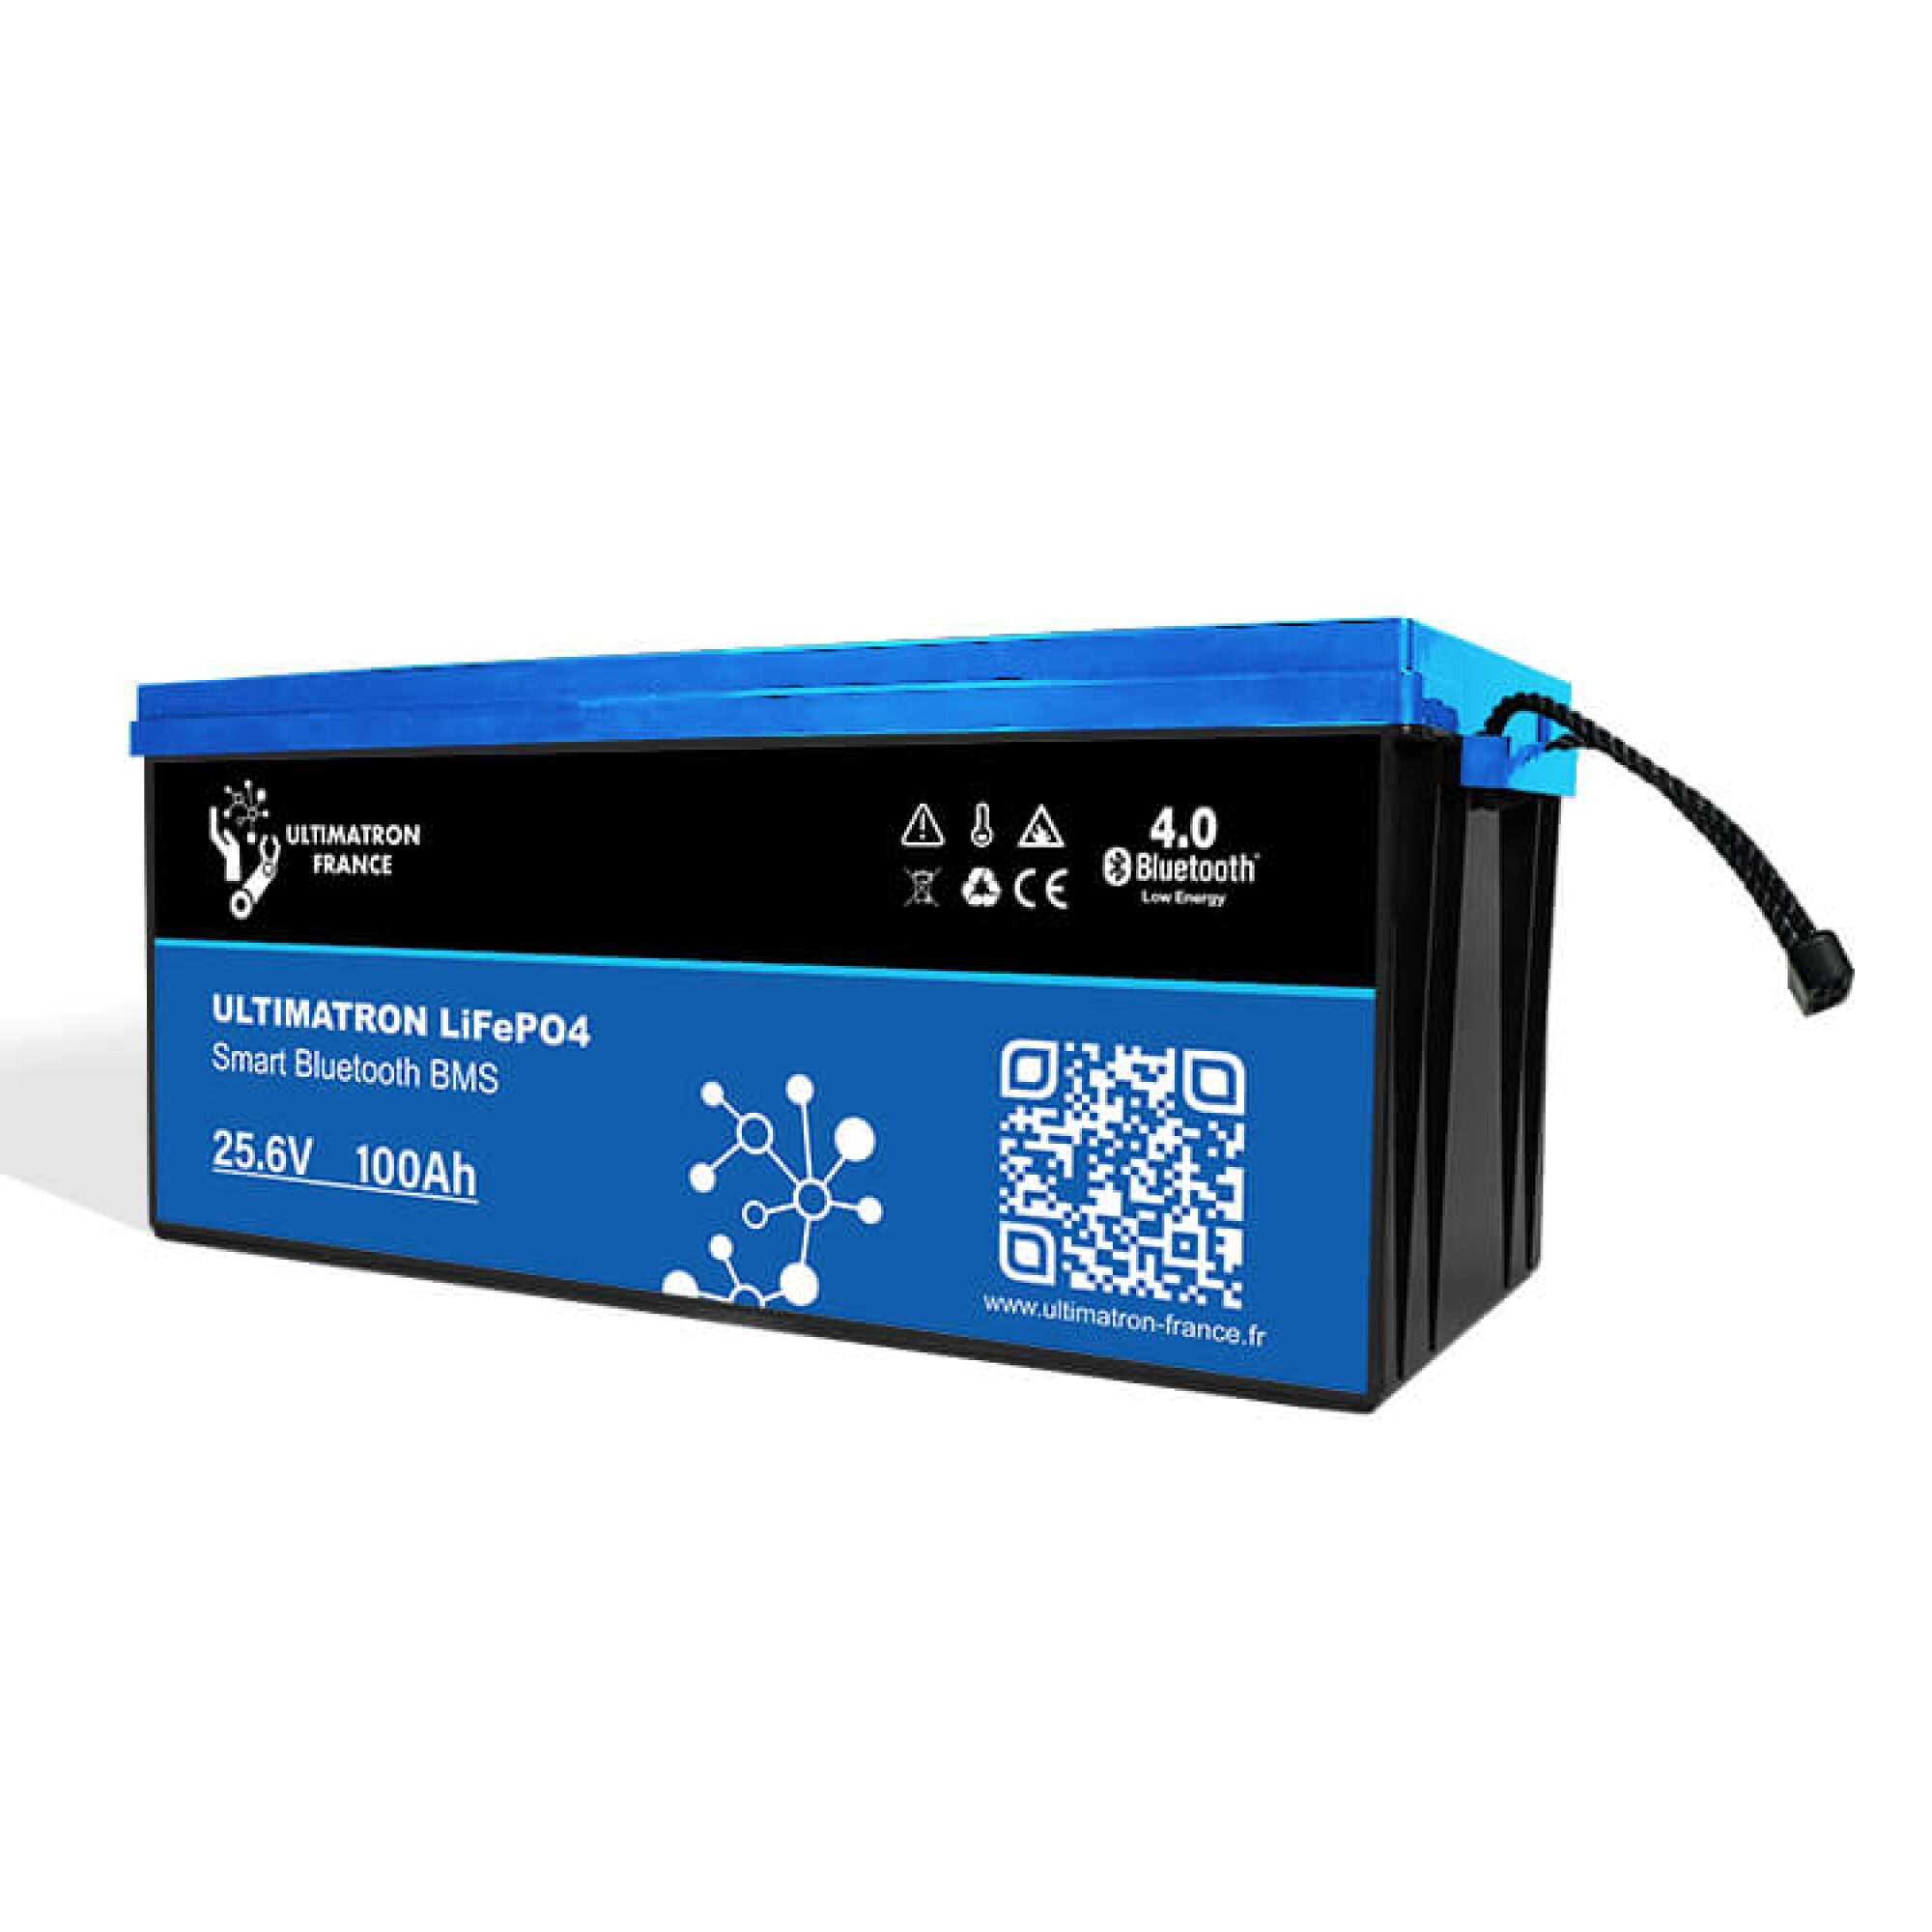 Ultimatron LiFePO4 25.6V 100Ah Lithium Batterie Smart BMS mit Bluetooth